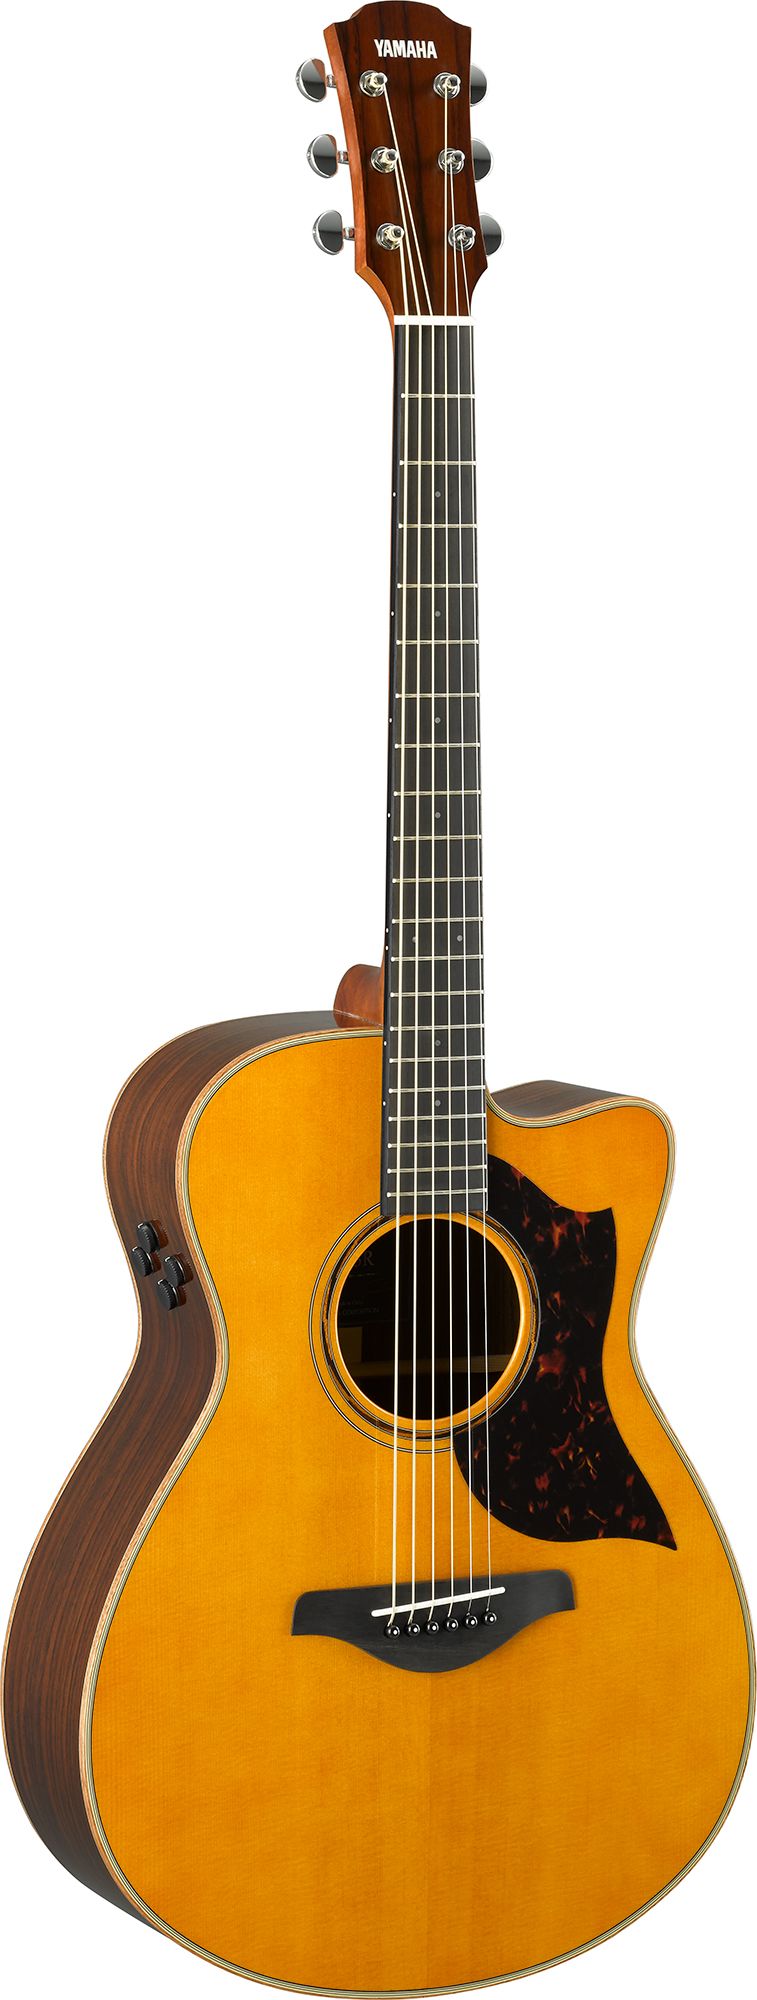 Yamaha AC3R Acoustic Guitar A.R.E. - Vintage Natural